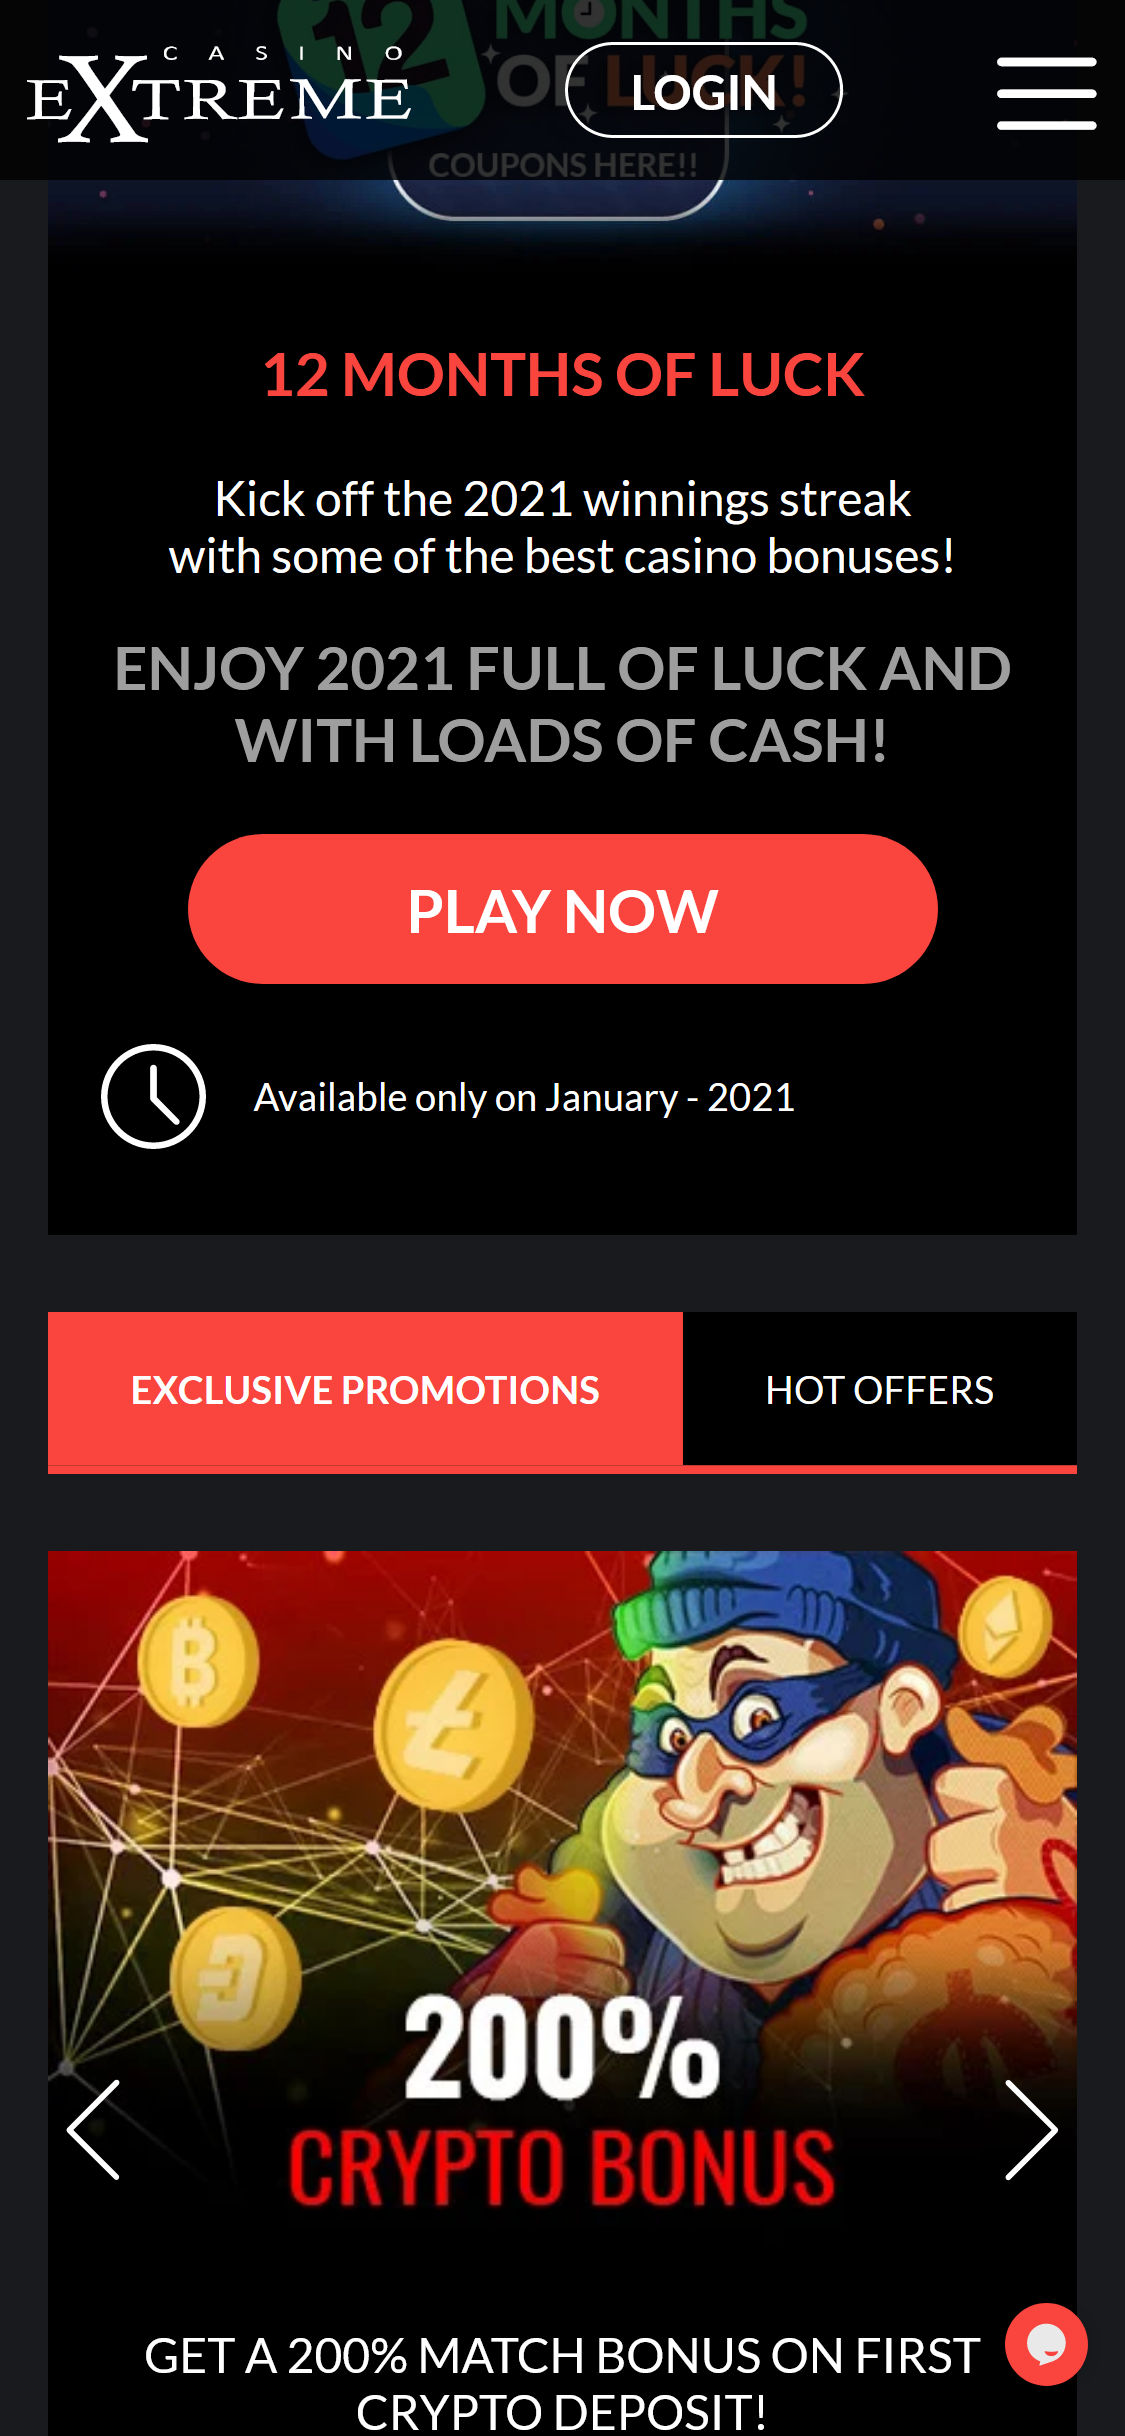 Casino Extreme Mobile No Deposit Bonus Review